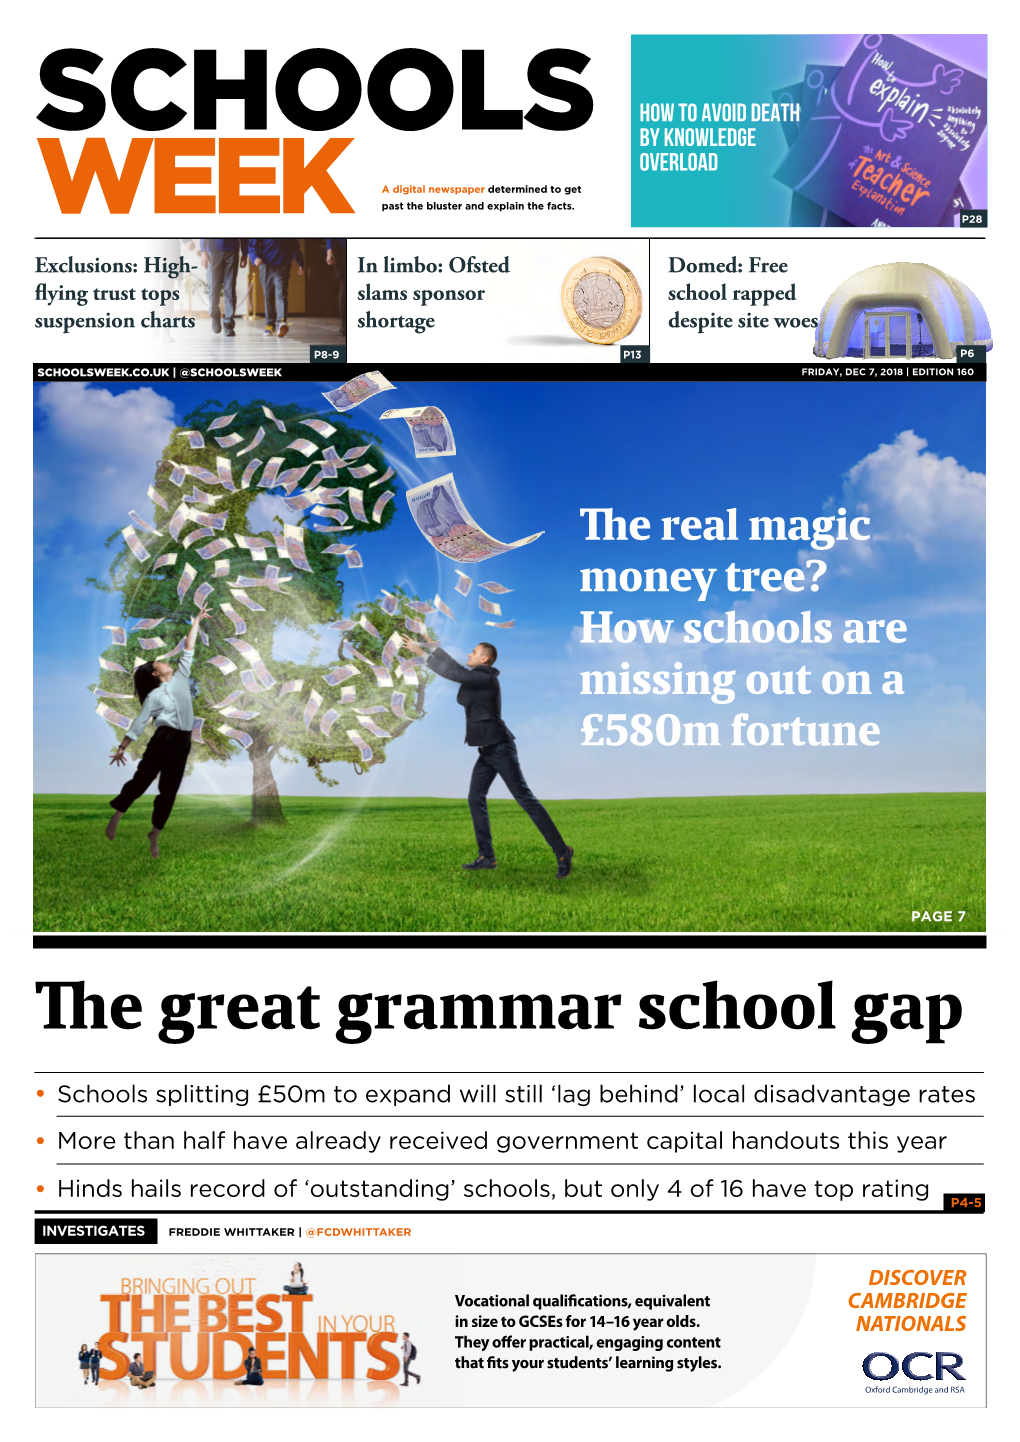 The Great Grammar School Gap